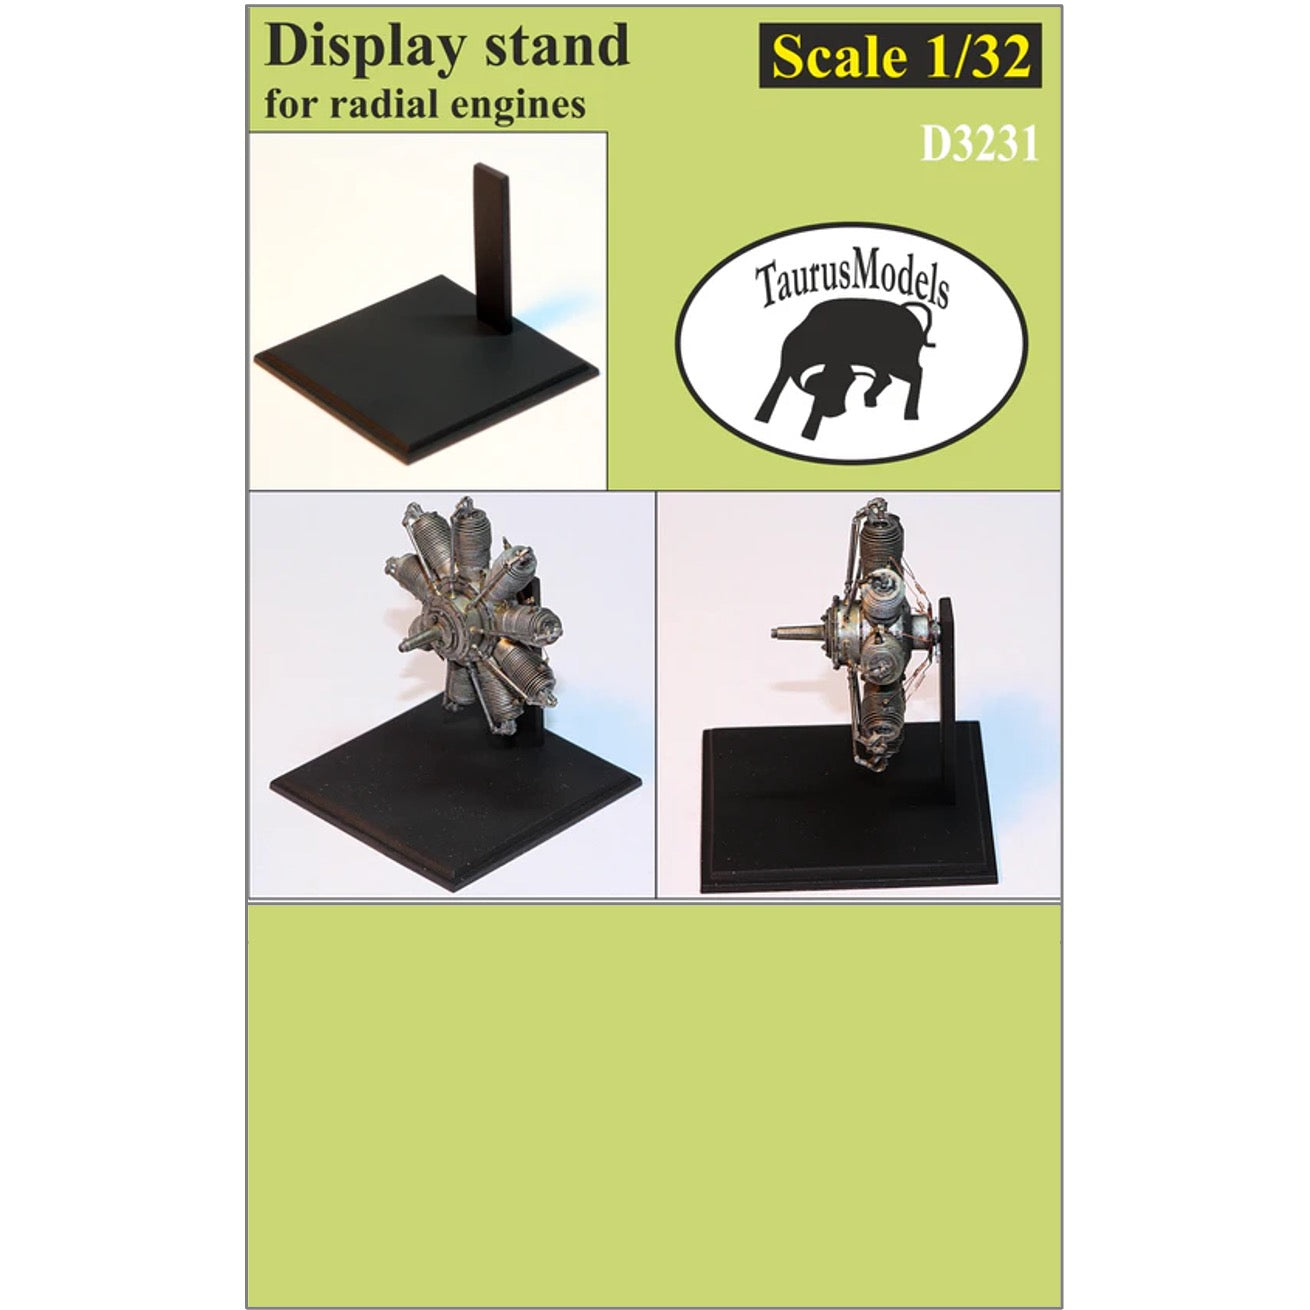 1/32 - Radial Engine - Display Stand